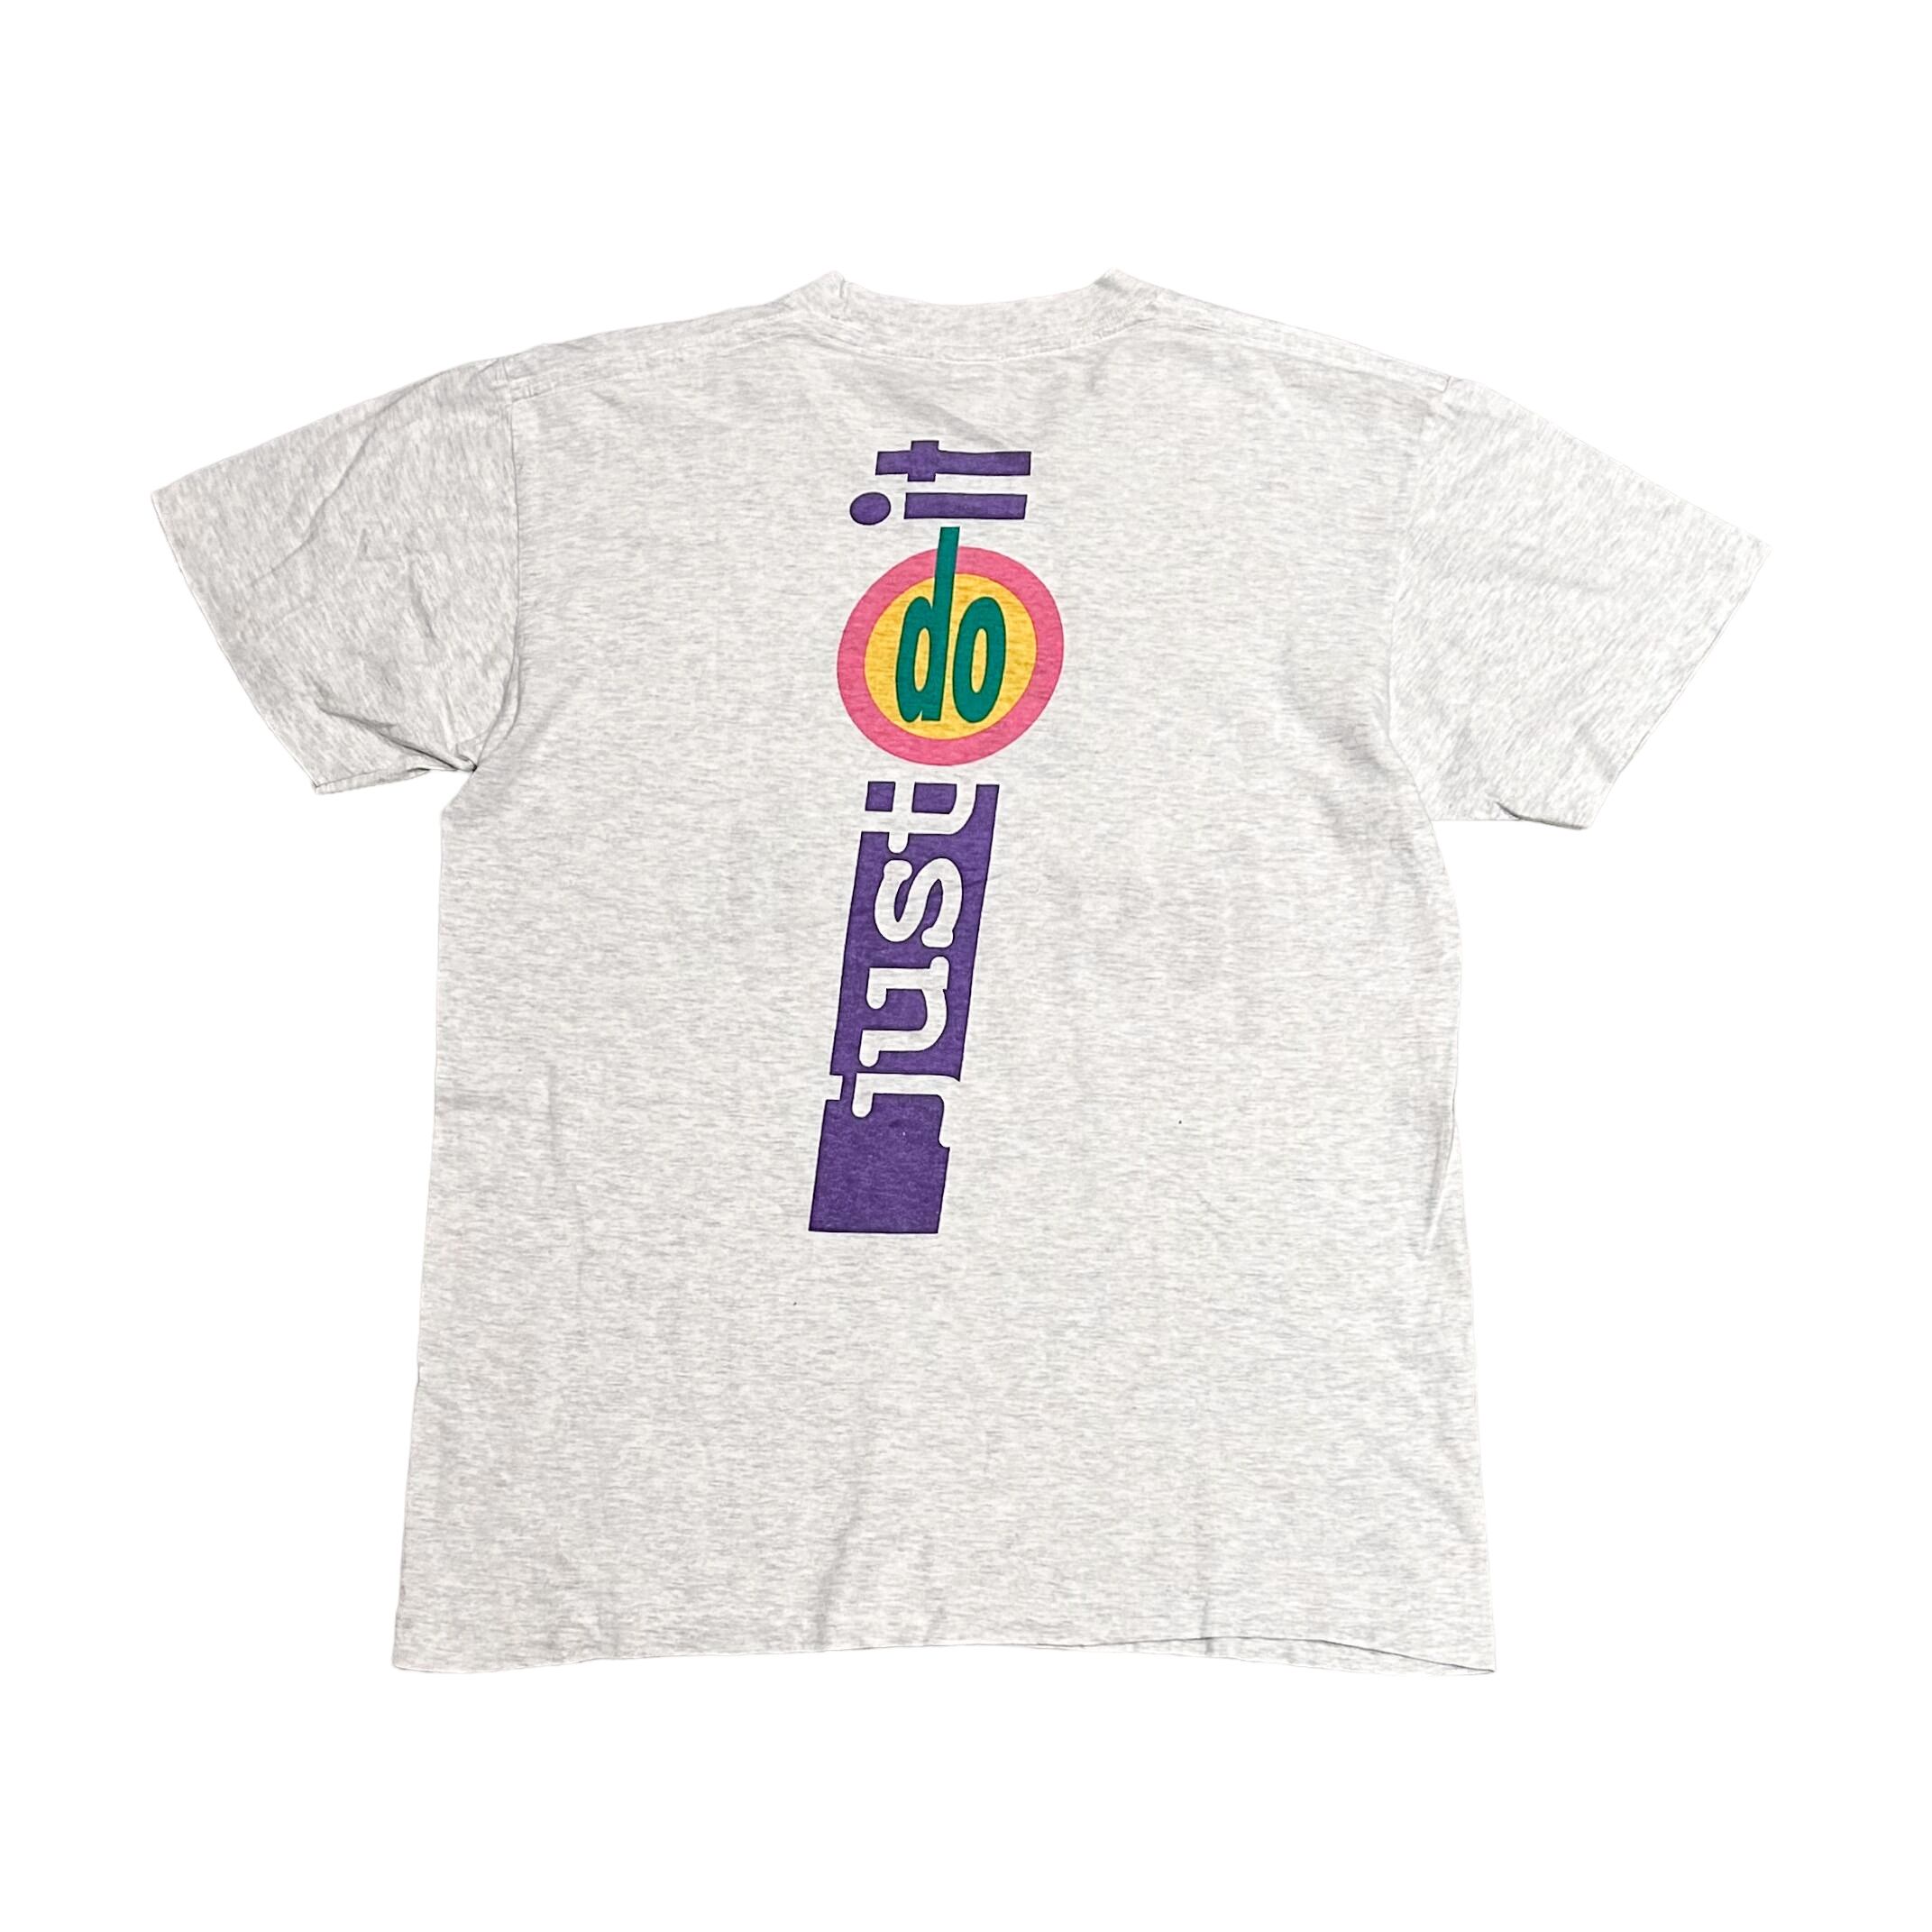 NIKE T-Shirts 1990s M T178